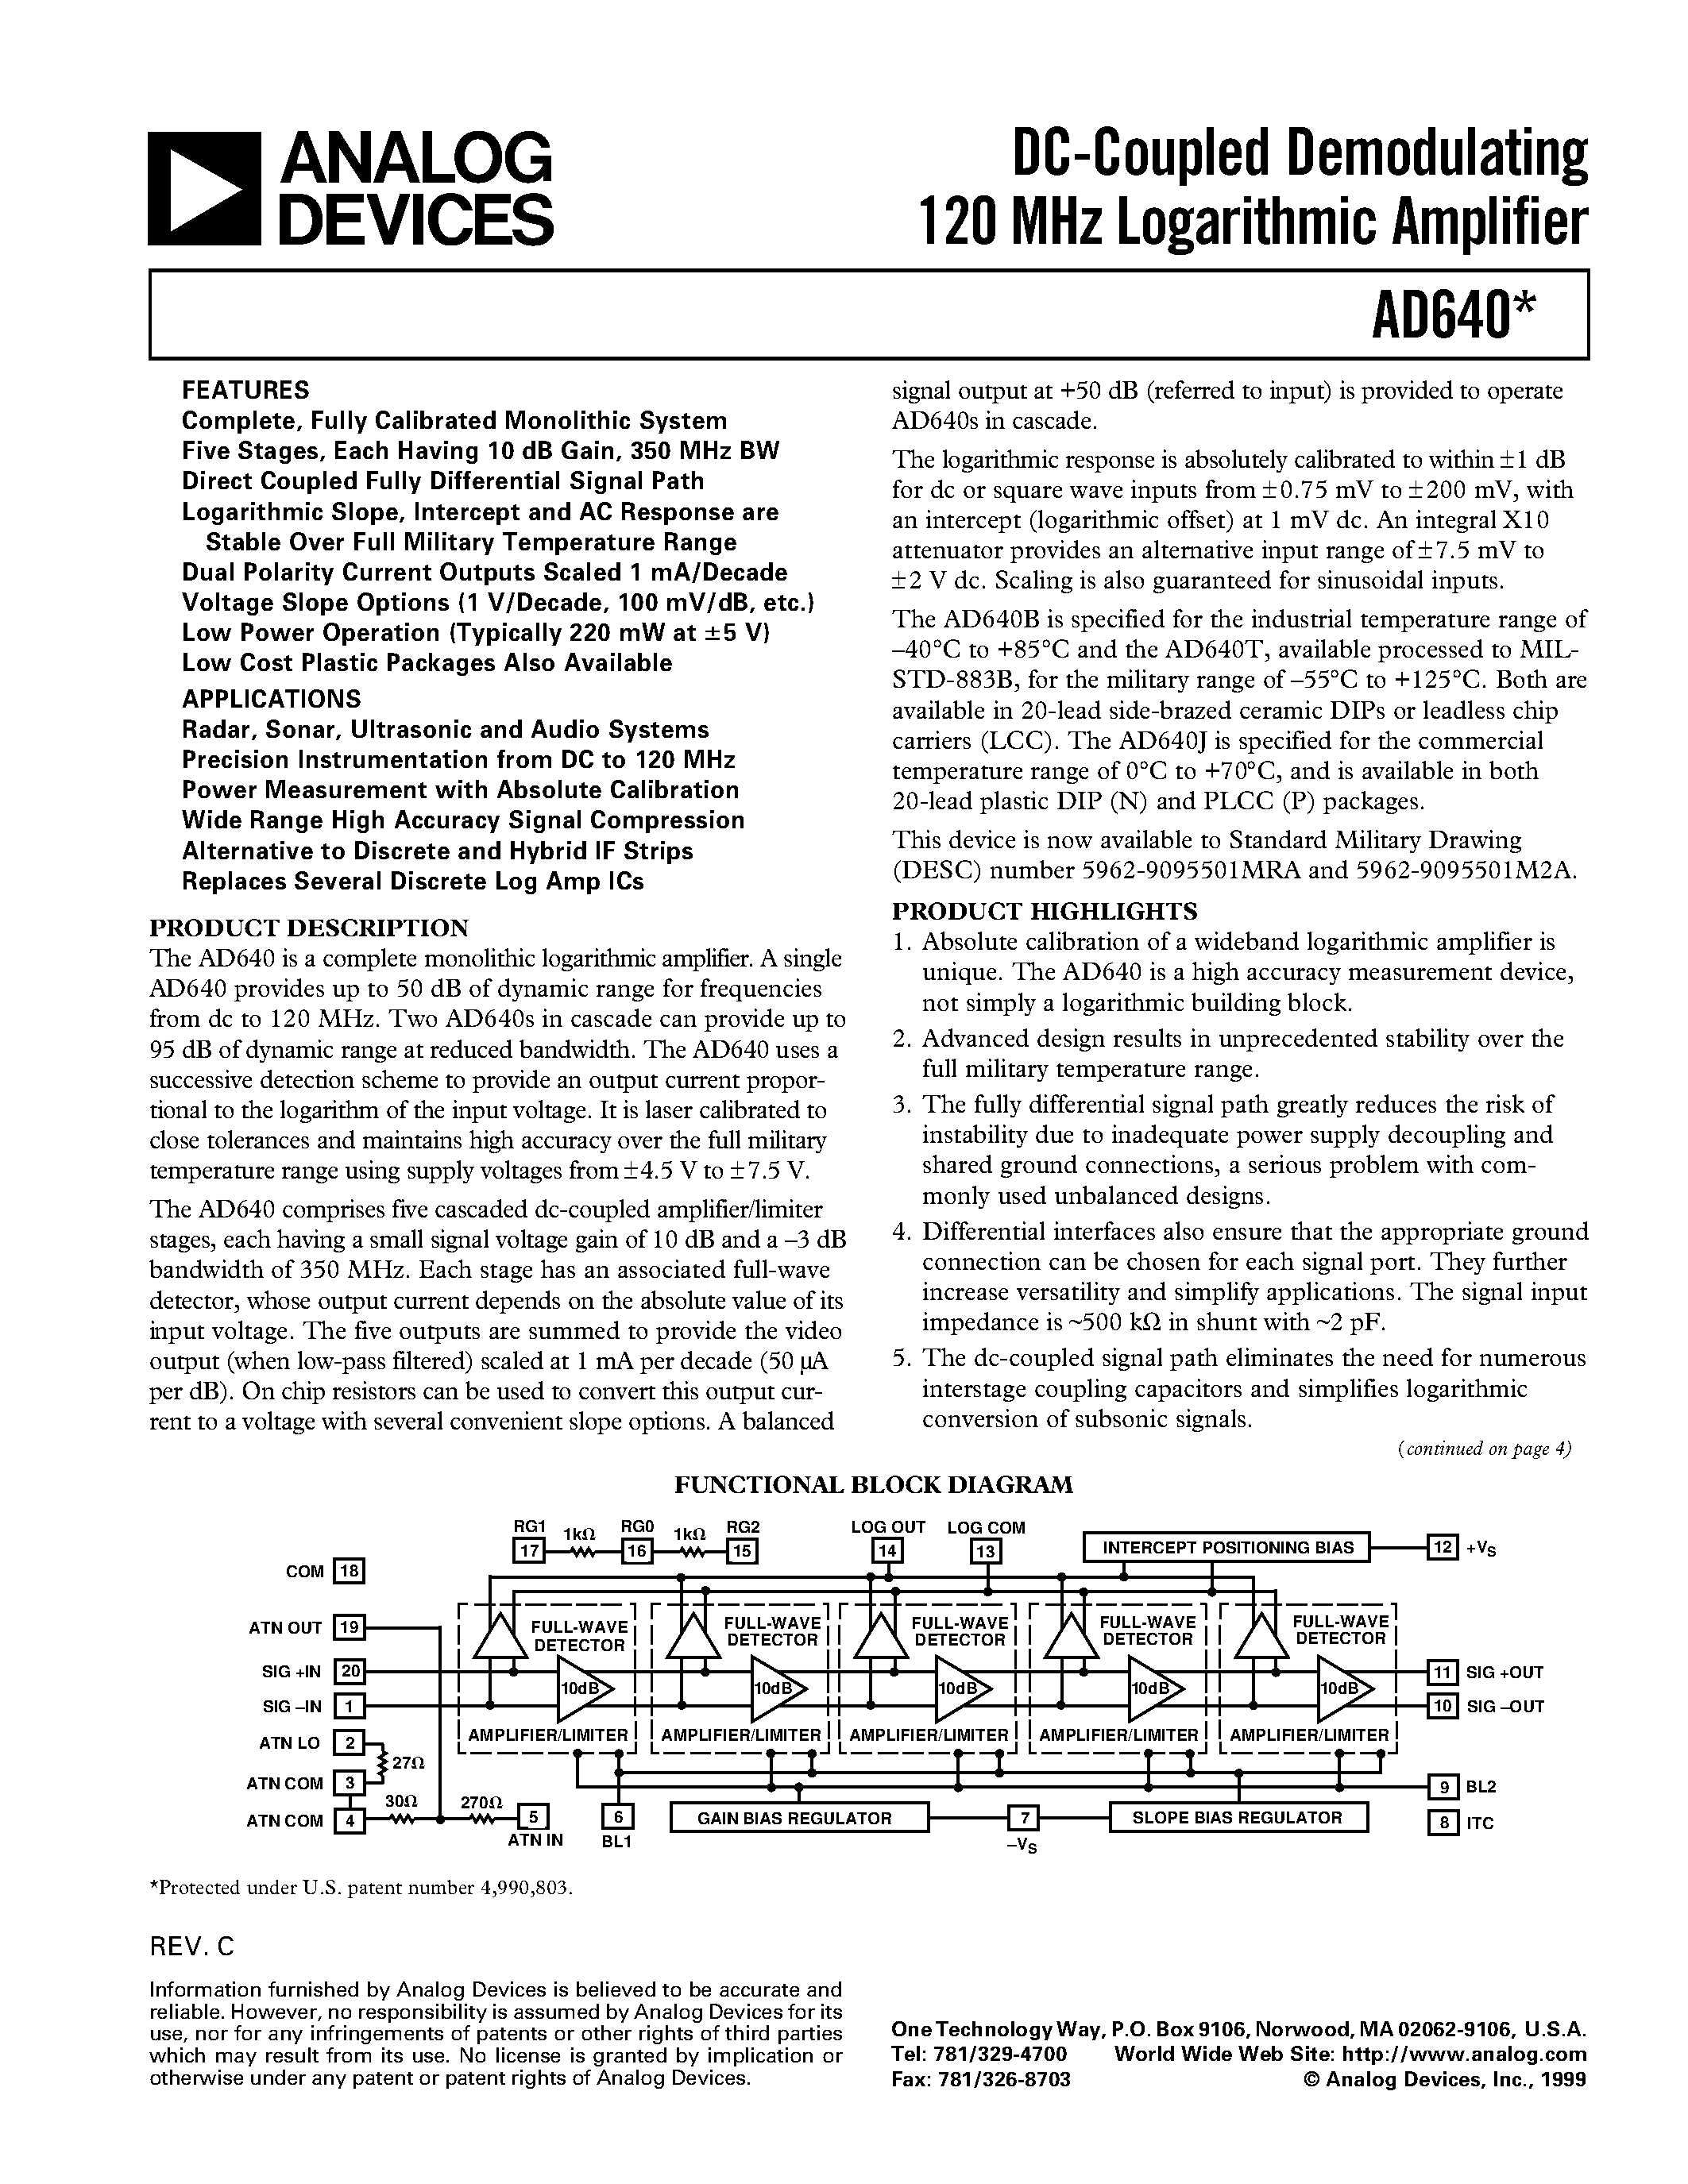 Даташит AD640]N - DC-Coupled Demodulating 120 MHz Logarithmic Amplifier страница 1